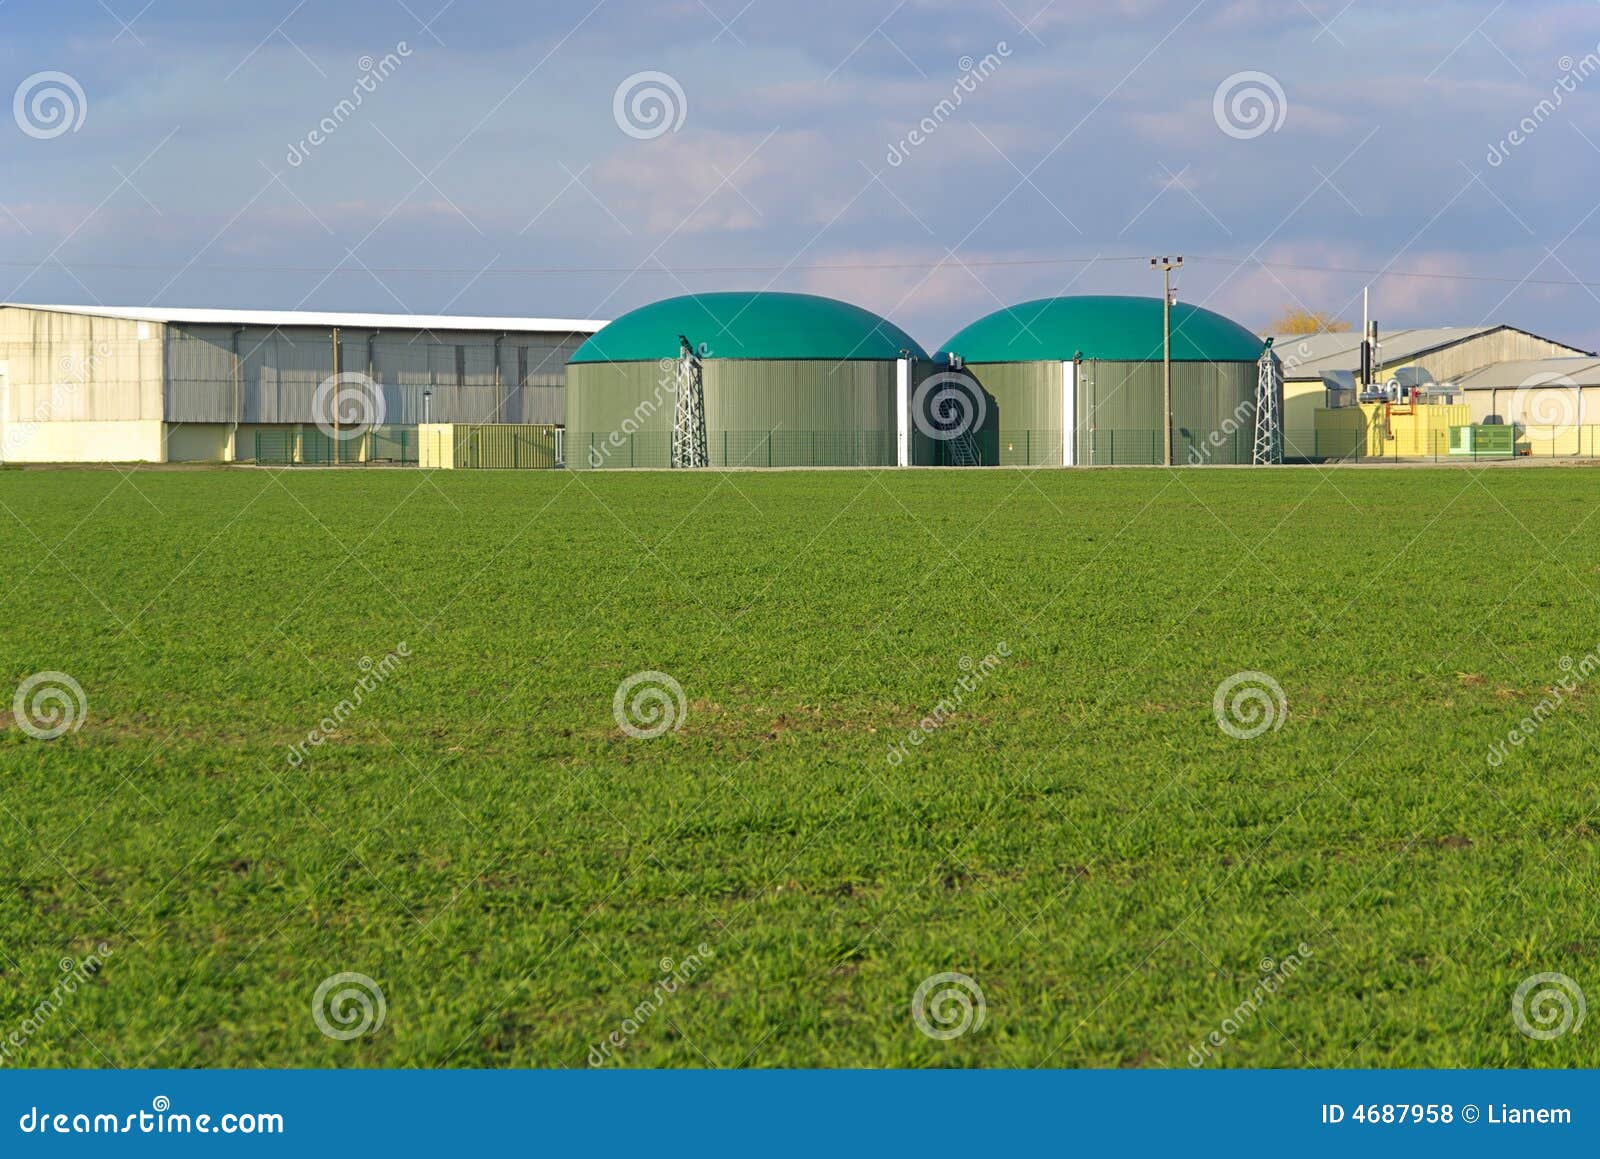 biogas plant 02